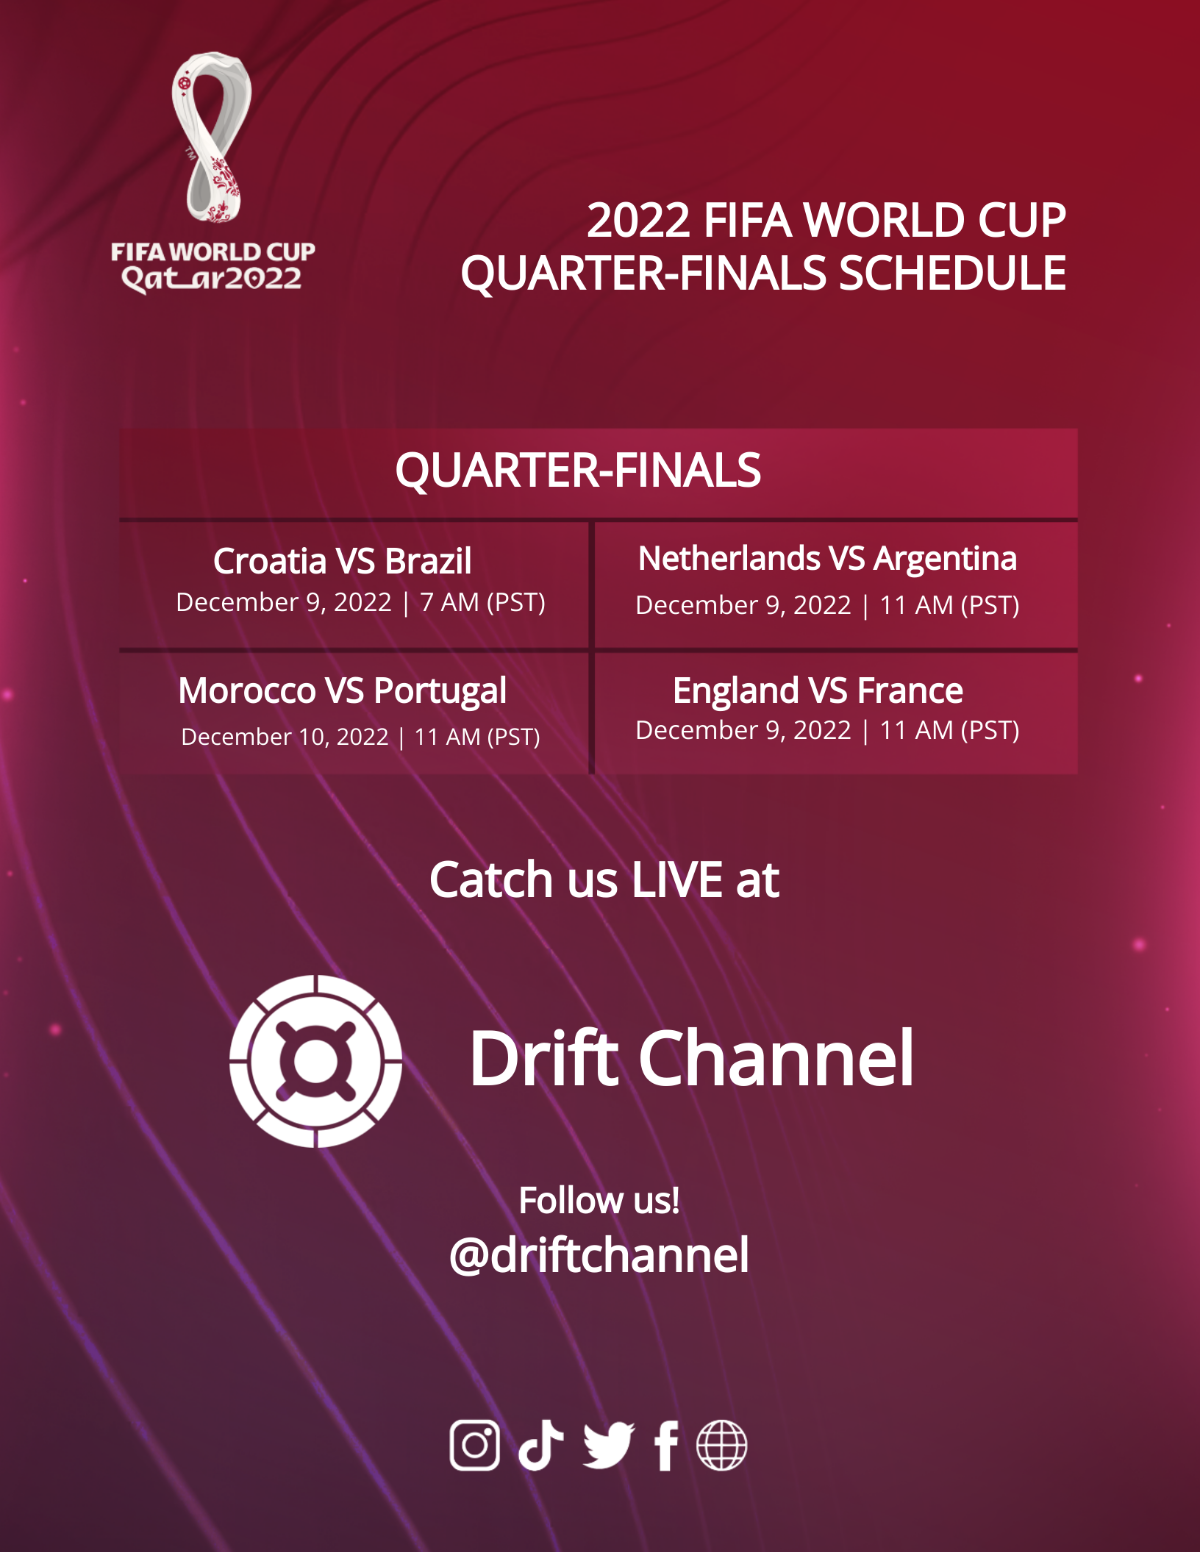 FIFA World Cup 2022 Quarter-Finals Schedule Flyer Template